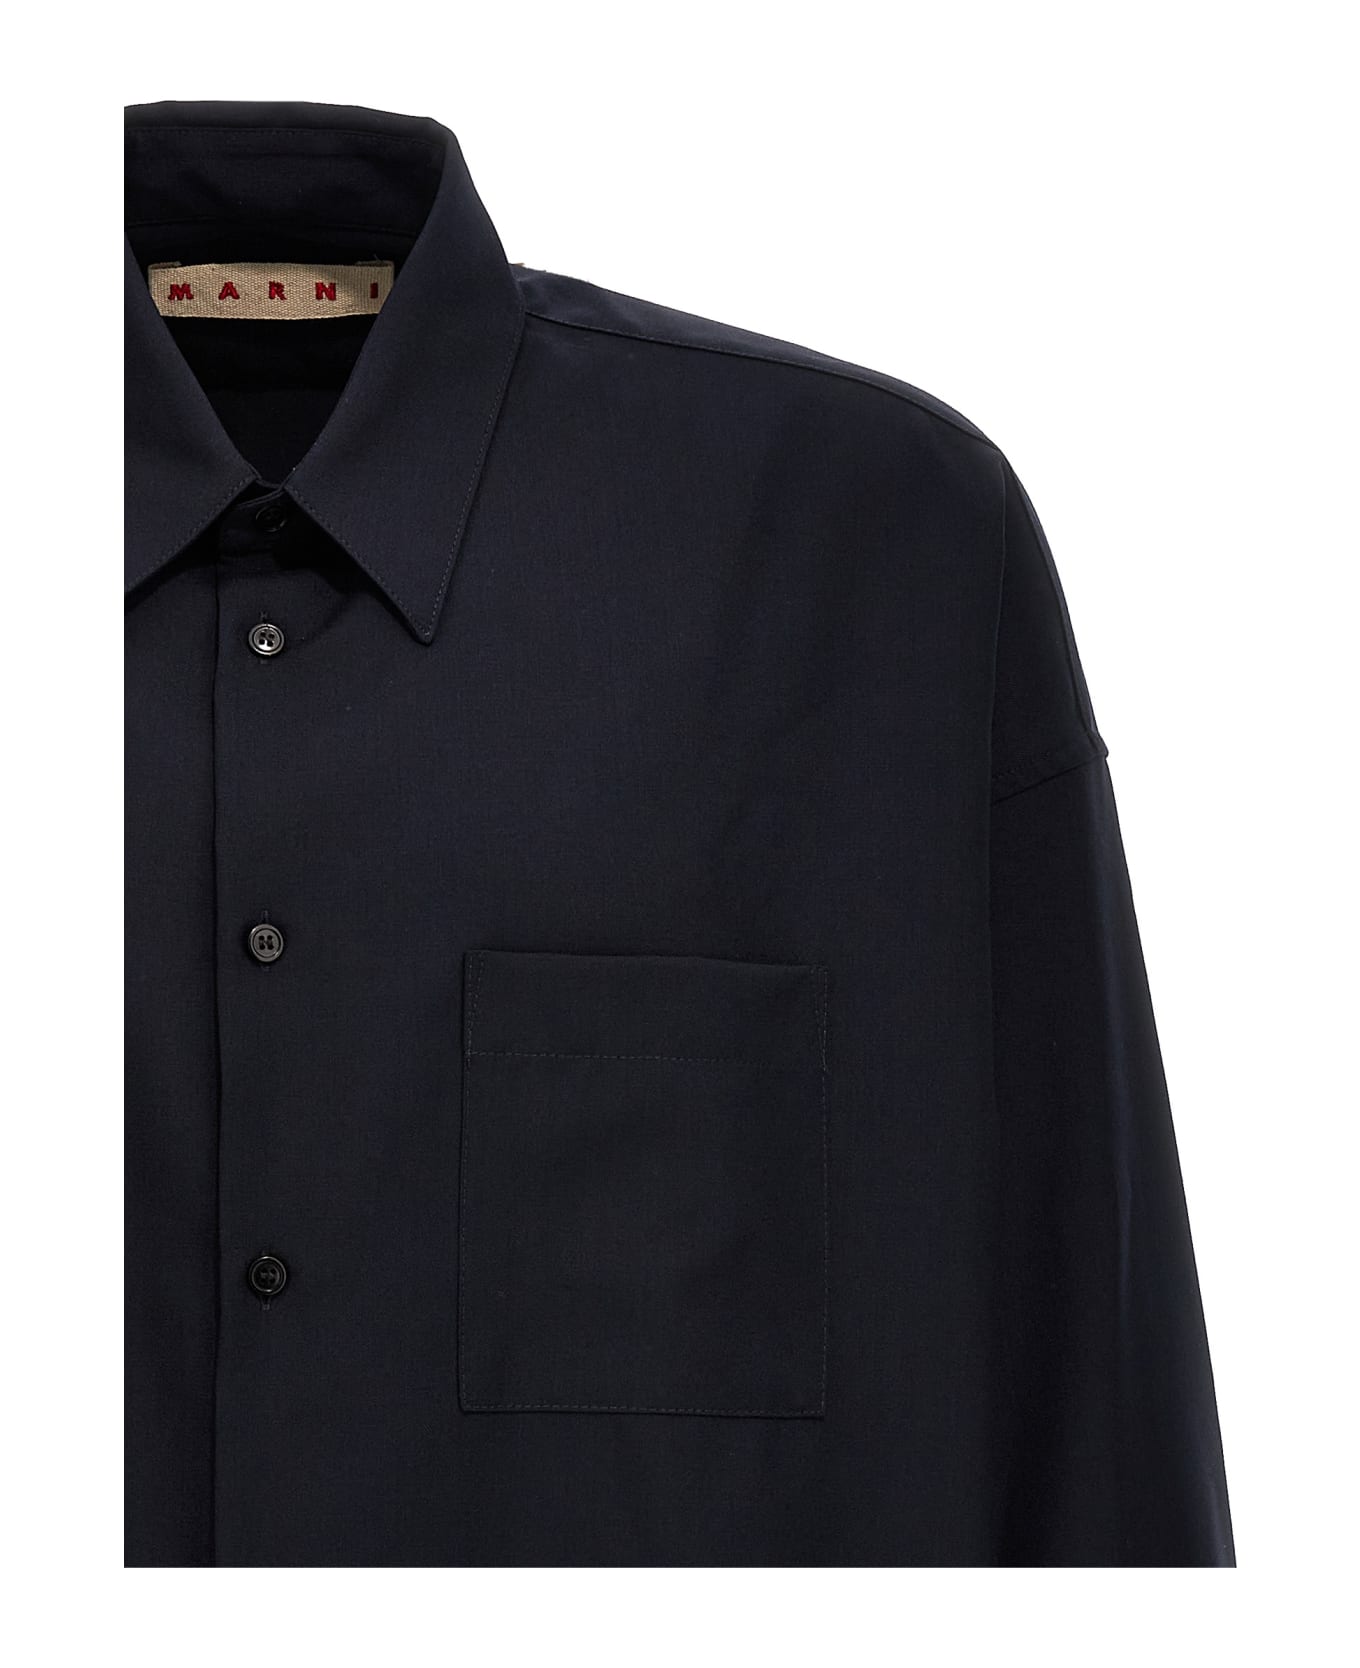 Marni Cool Wool Shirt - Blu black